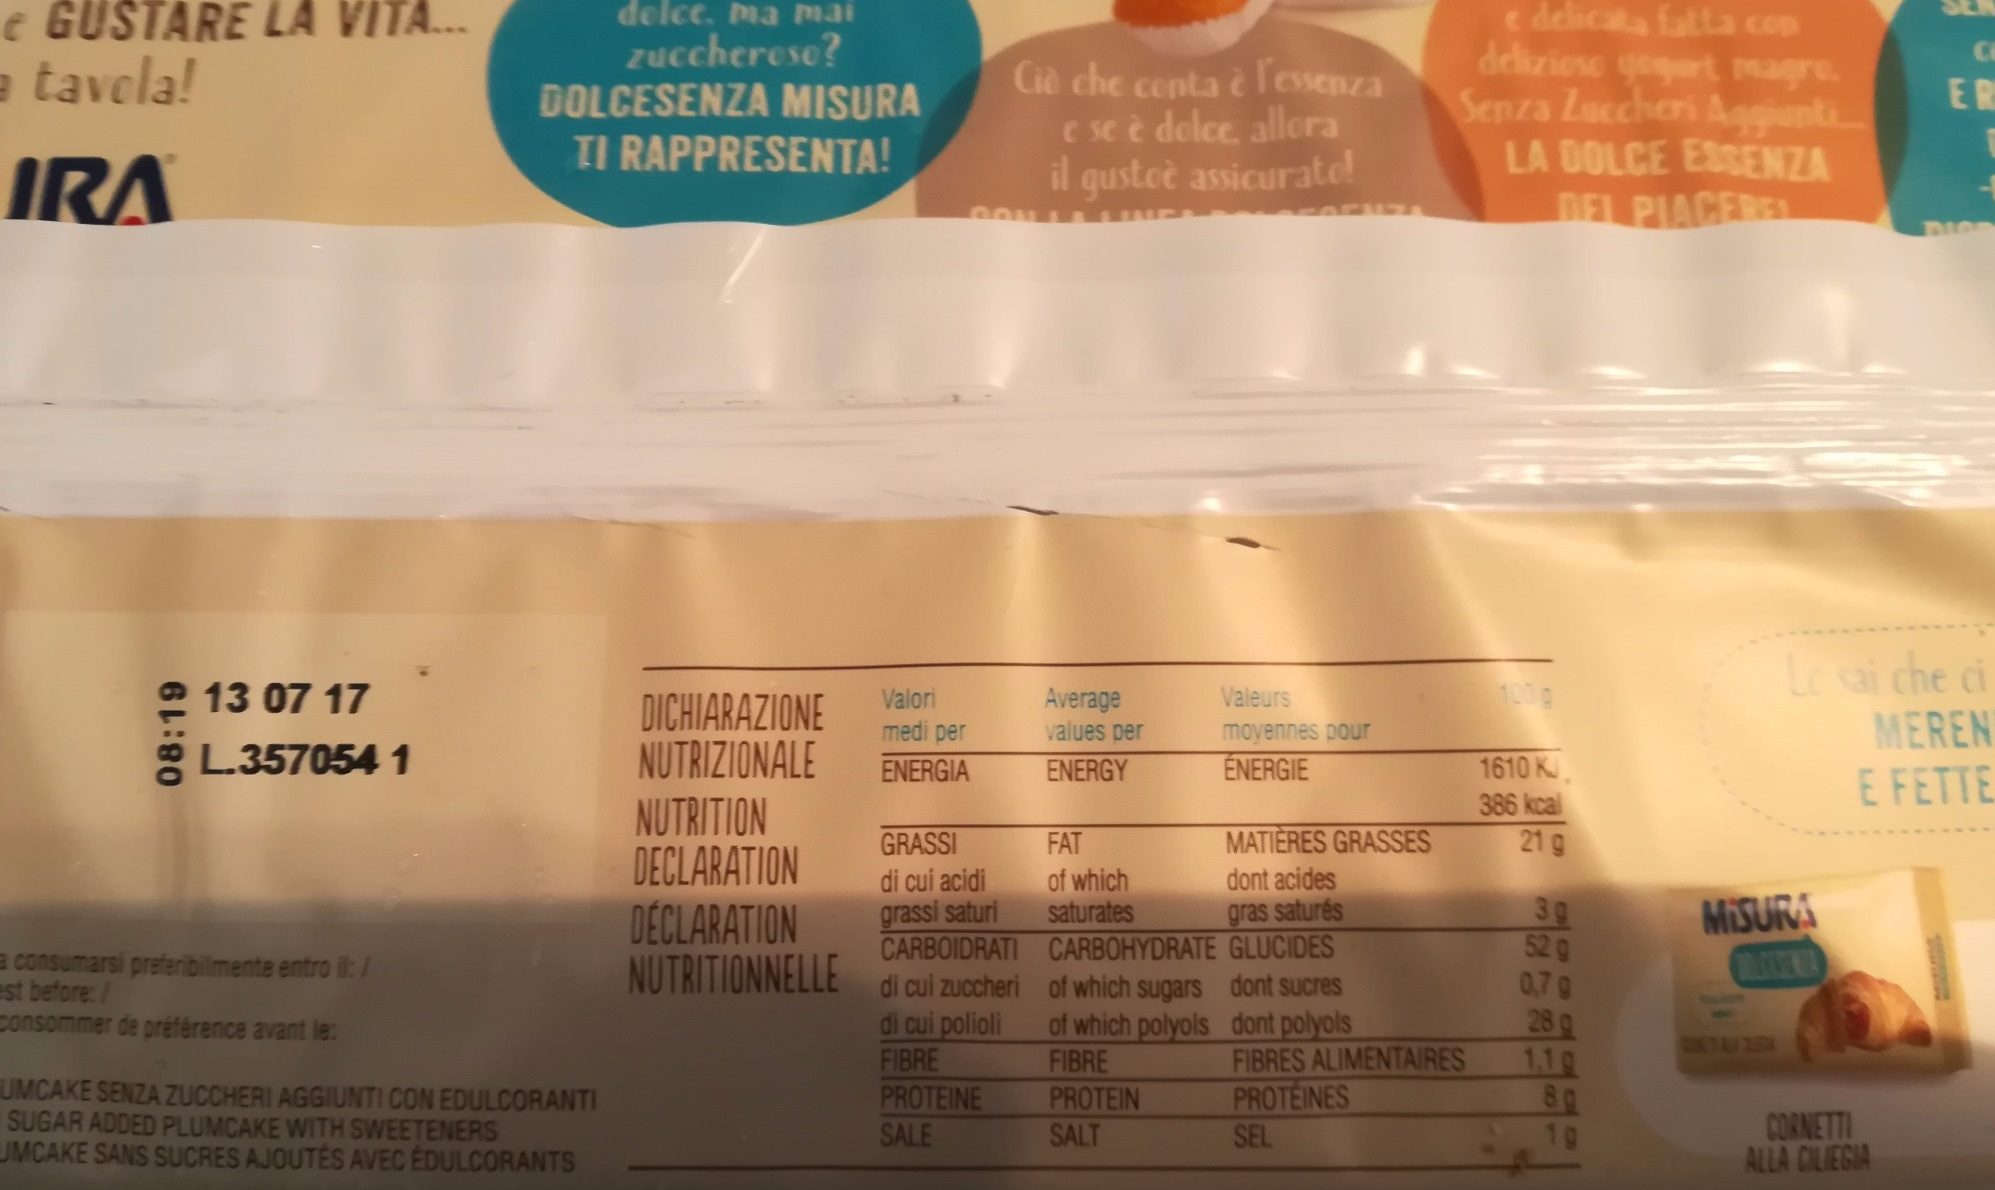 Dolcesenza plumcake - Ingredients - it